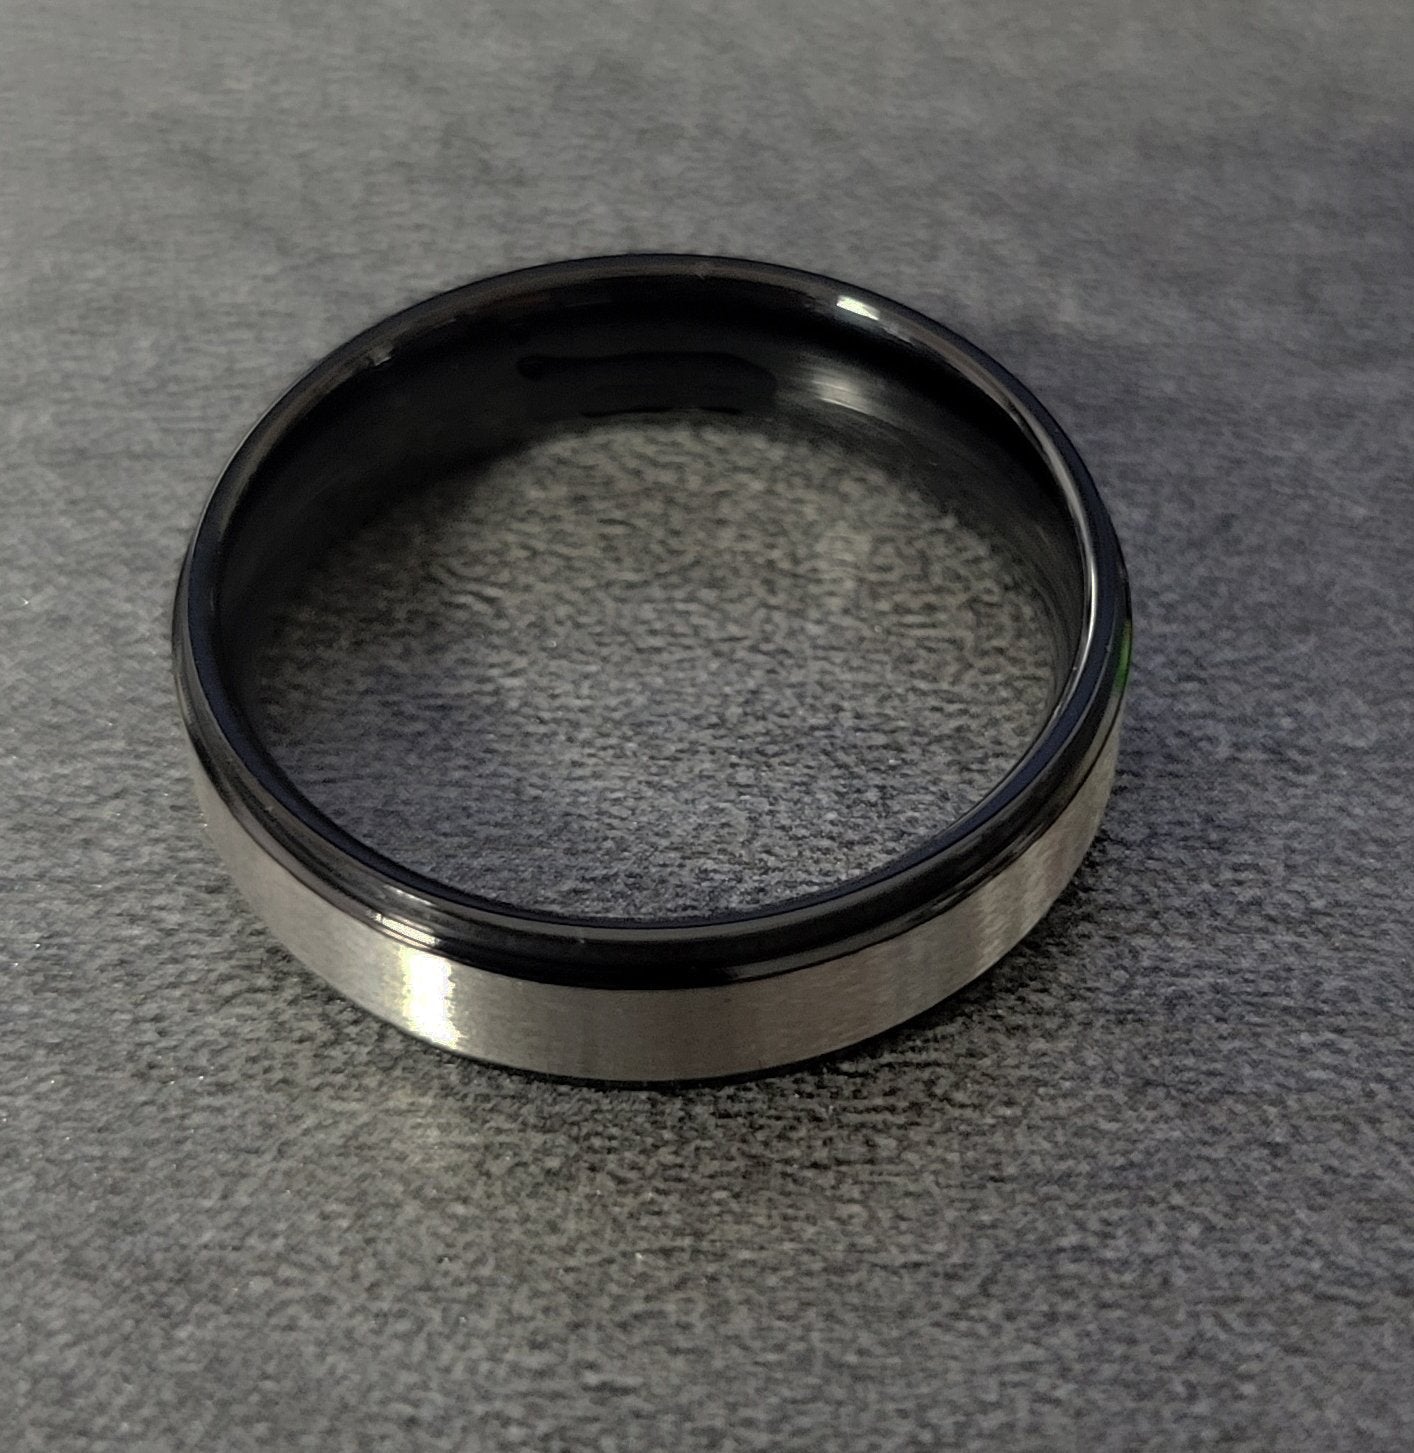 Think Engraved wedding Band Personalized Men's Brushed Steel Wedding Ring - Engraved Handwriting Wedding Ring